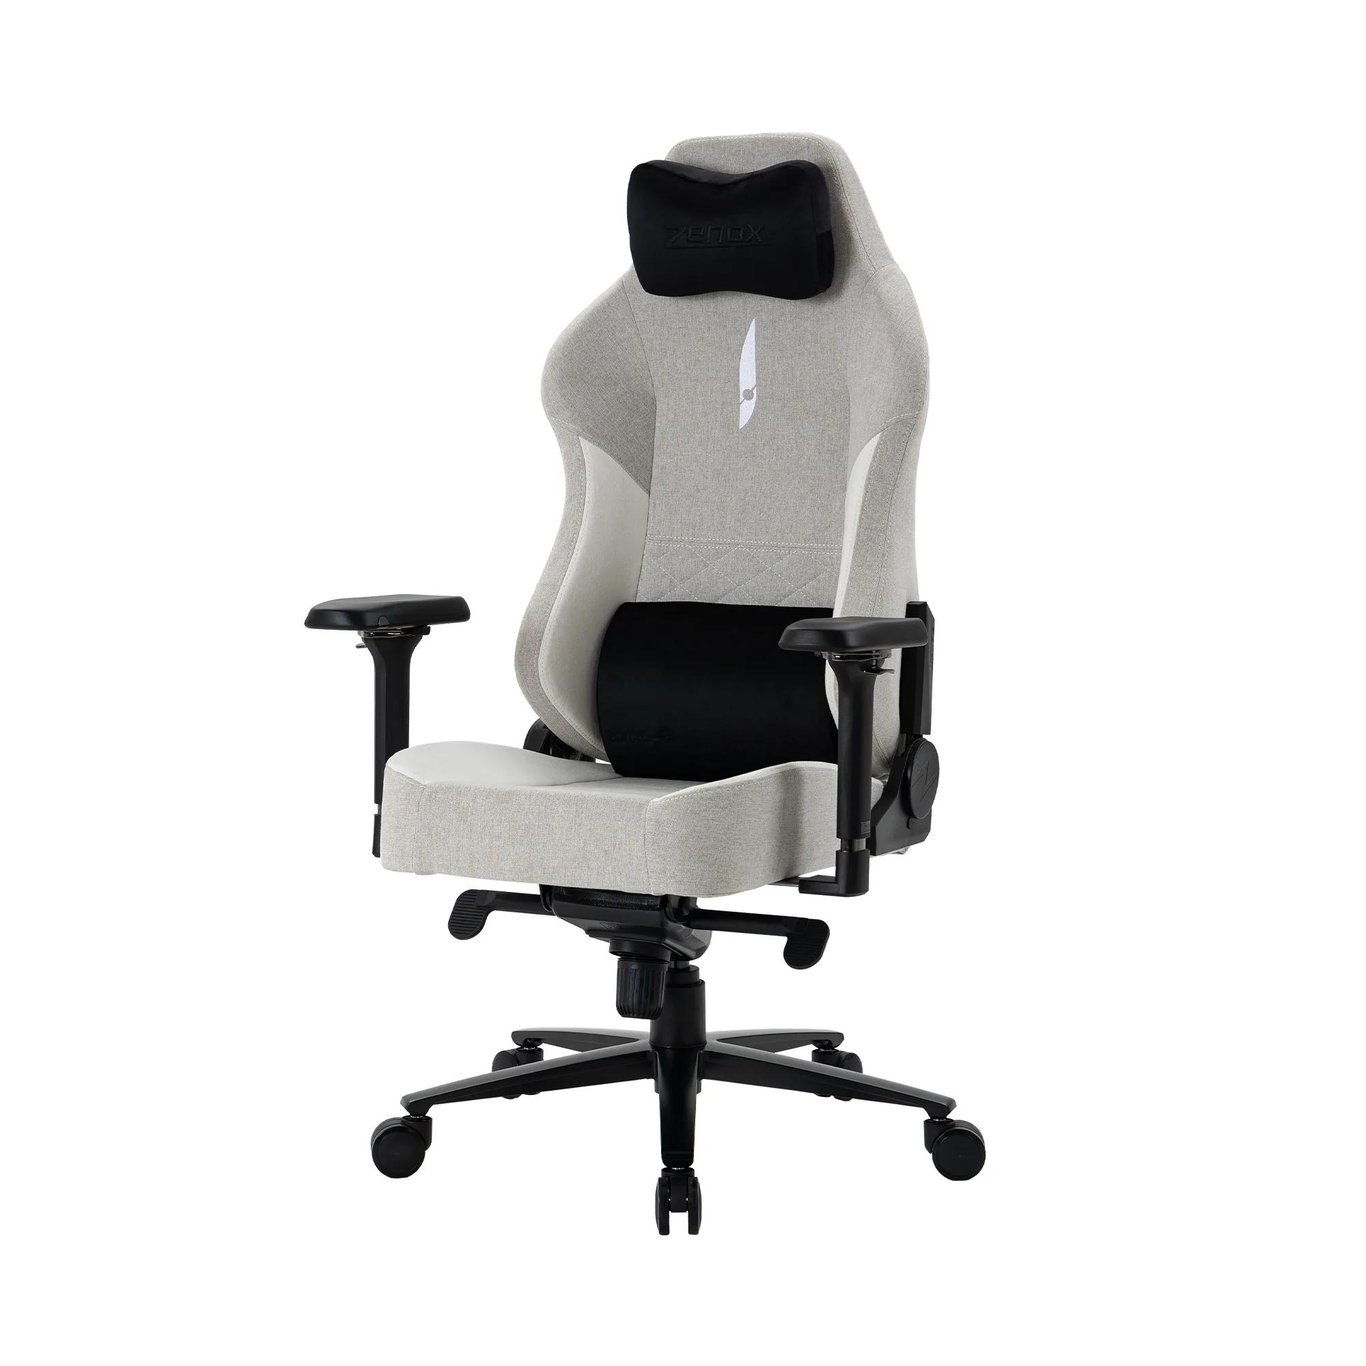 Zenox Spectre-MK2 Racing Chair  - Fabric/Light Grey /-2